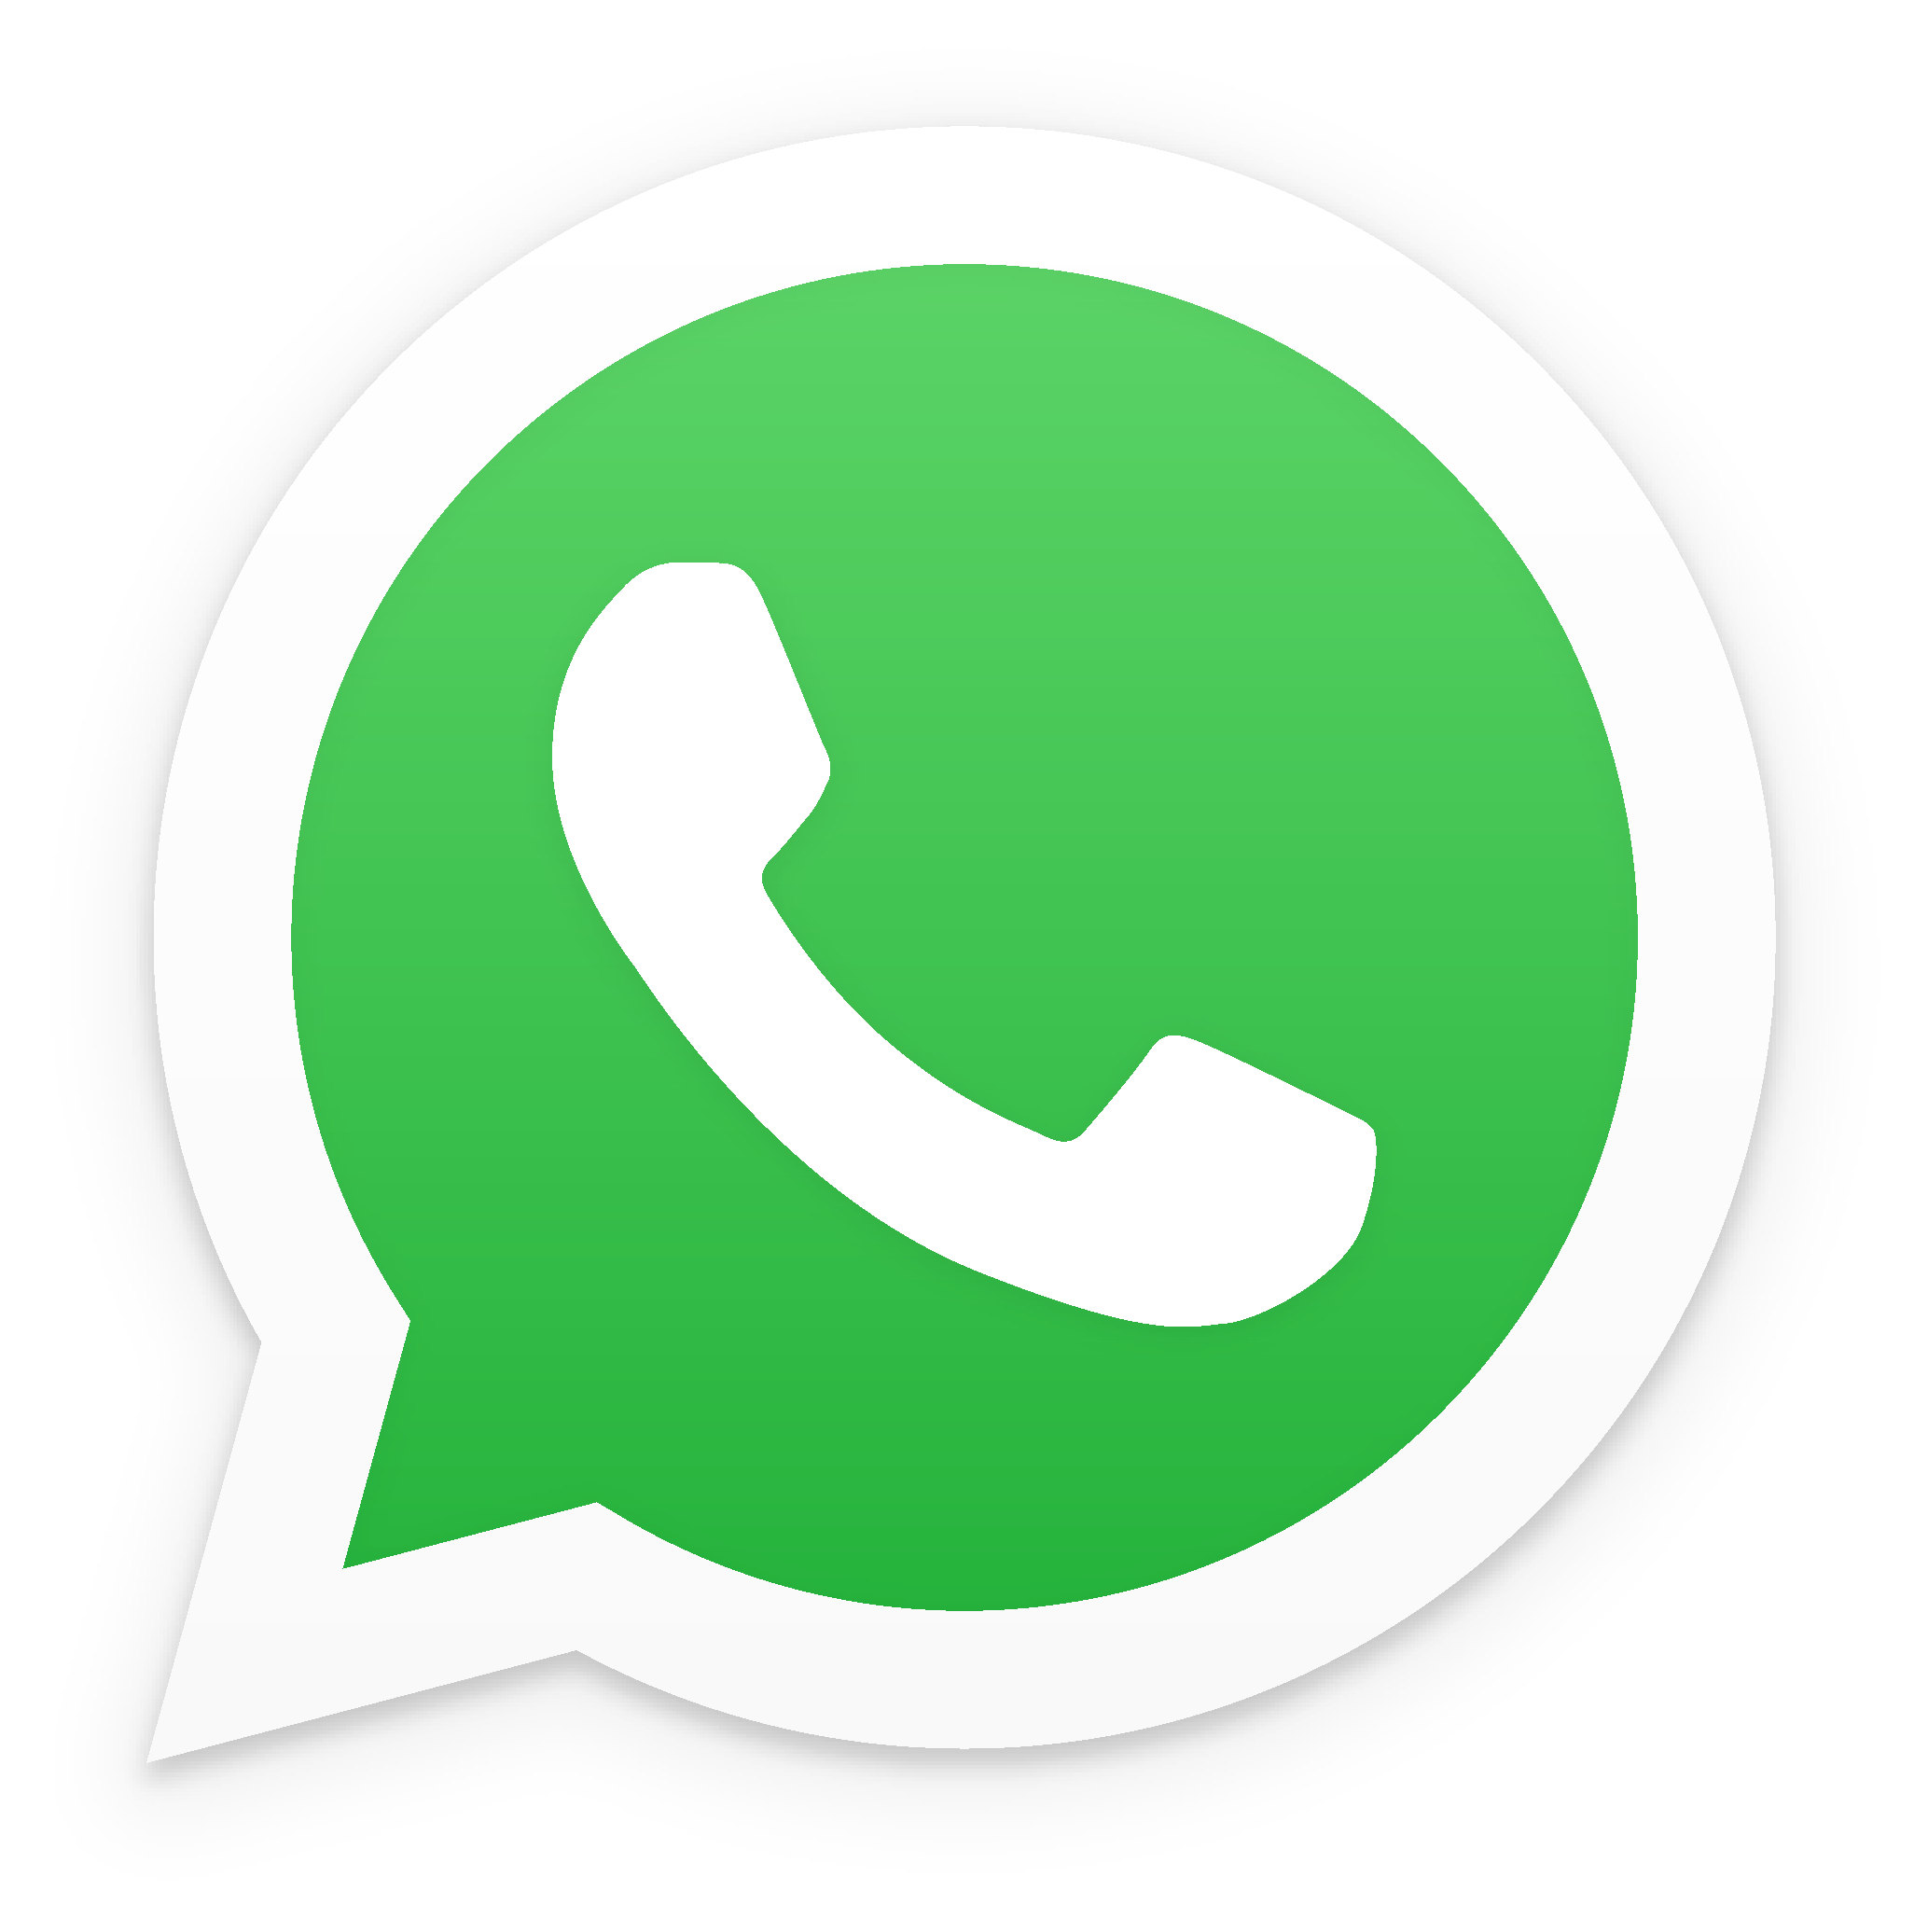 whatsapp logo image hd